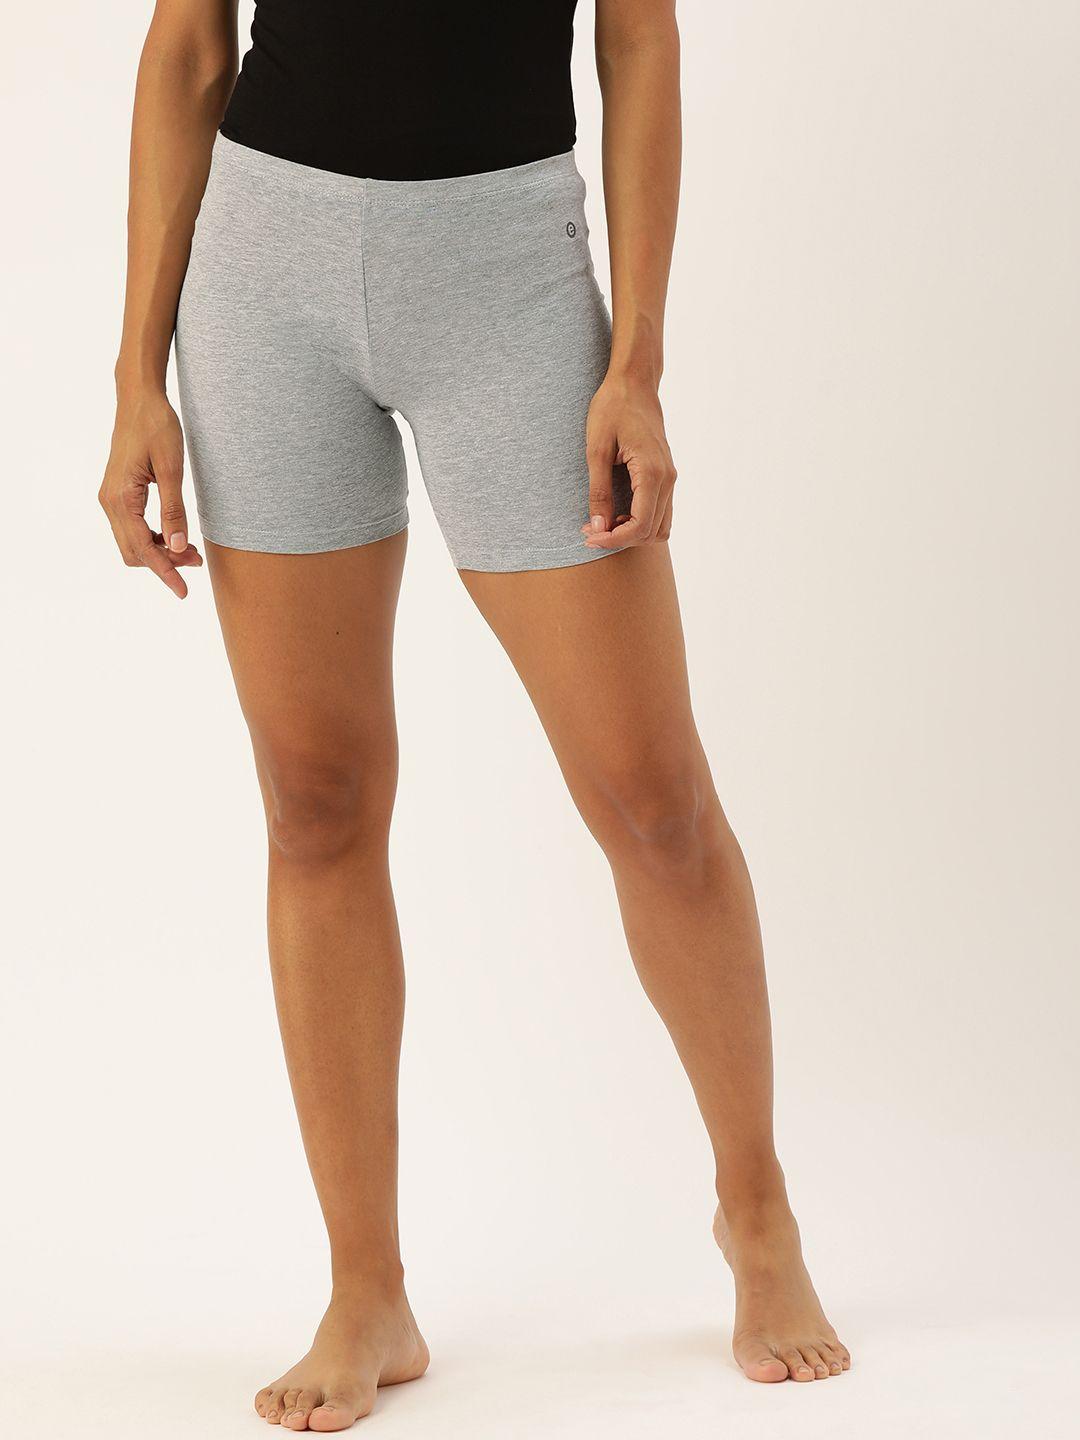 enamor-women-hugged-fit-stretch-cotton-cycling-shorts